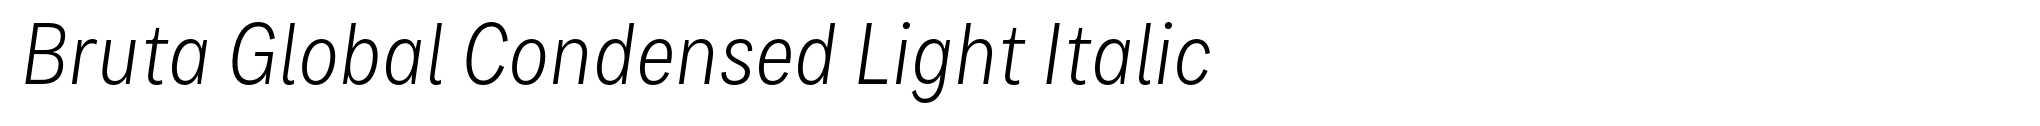 Bruta Global Condensed Light Italic image